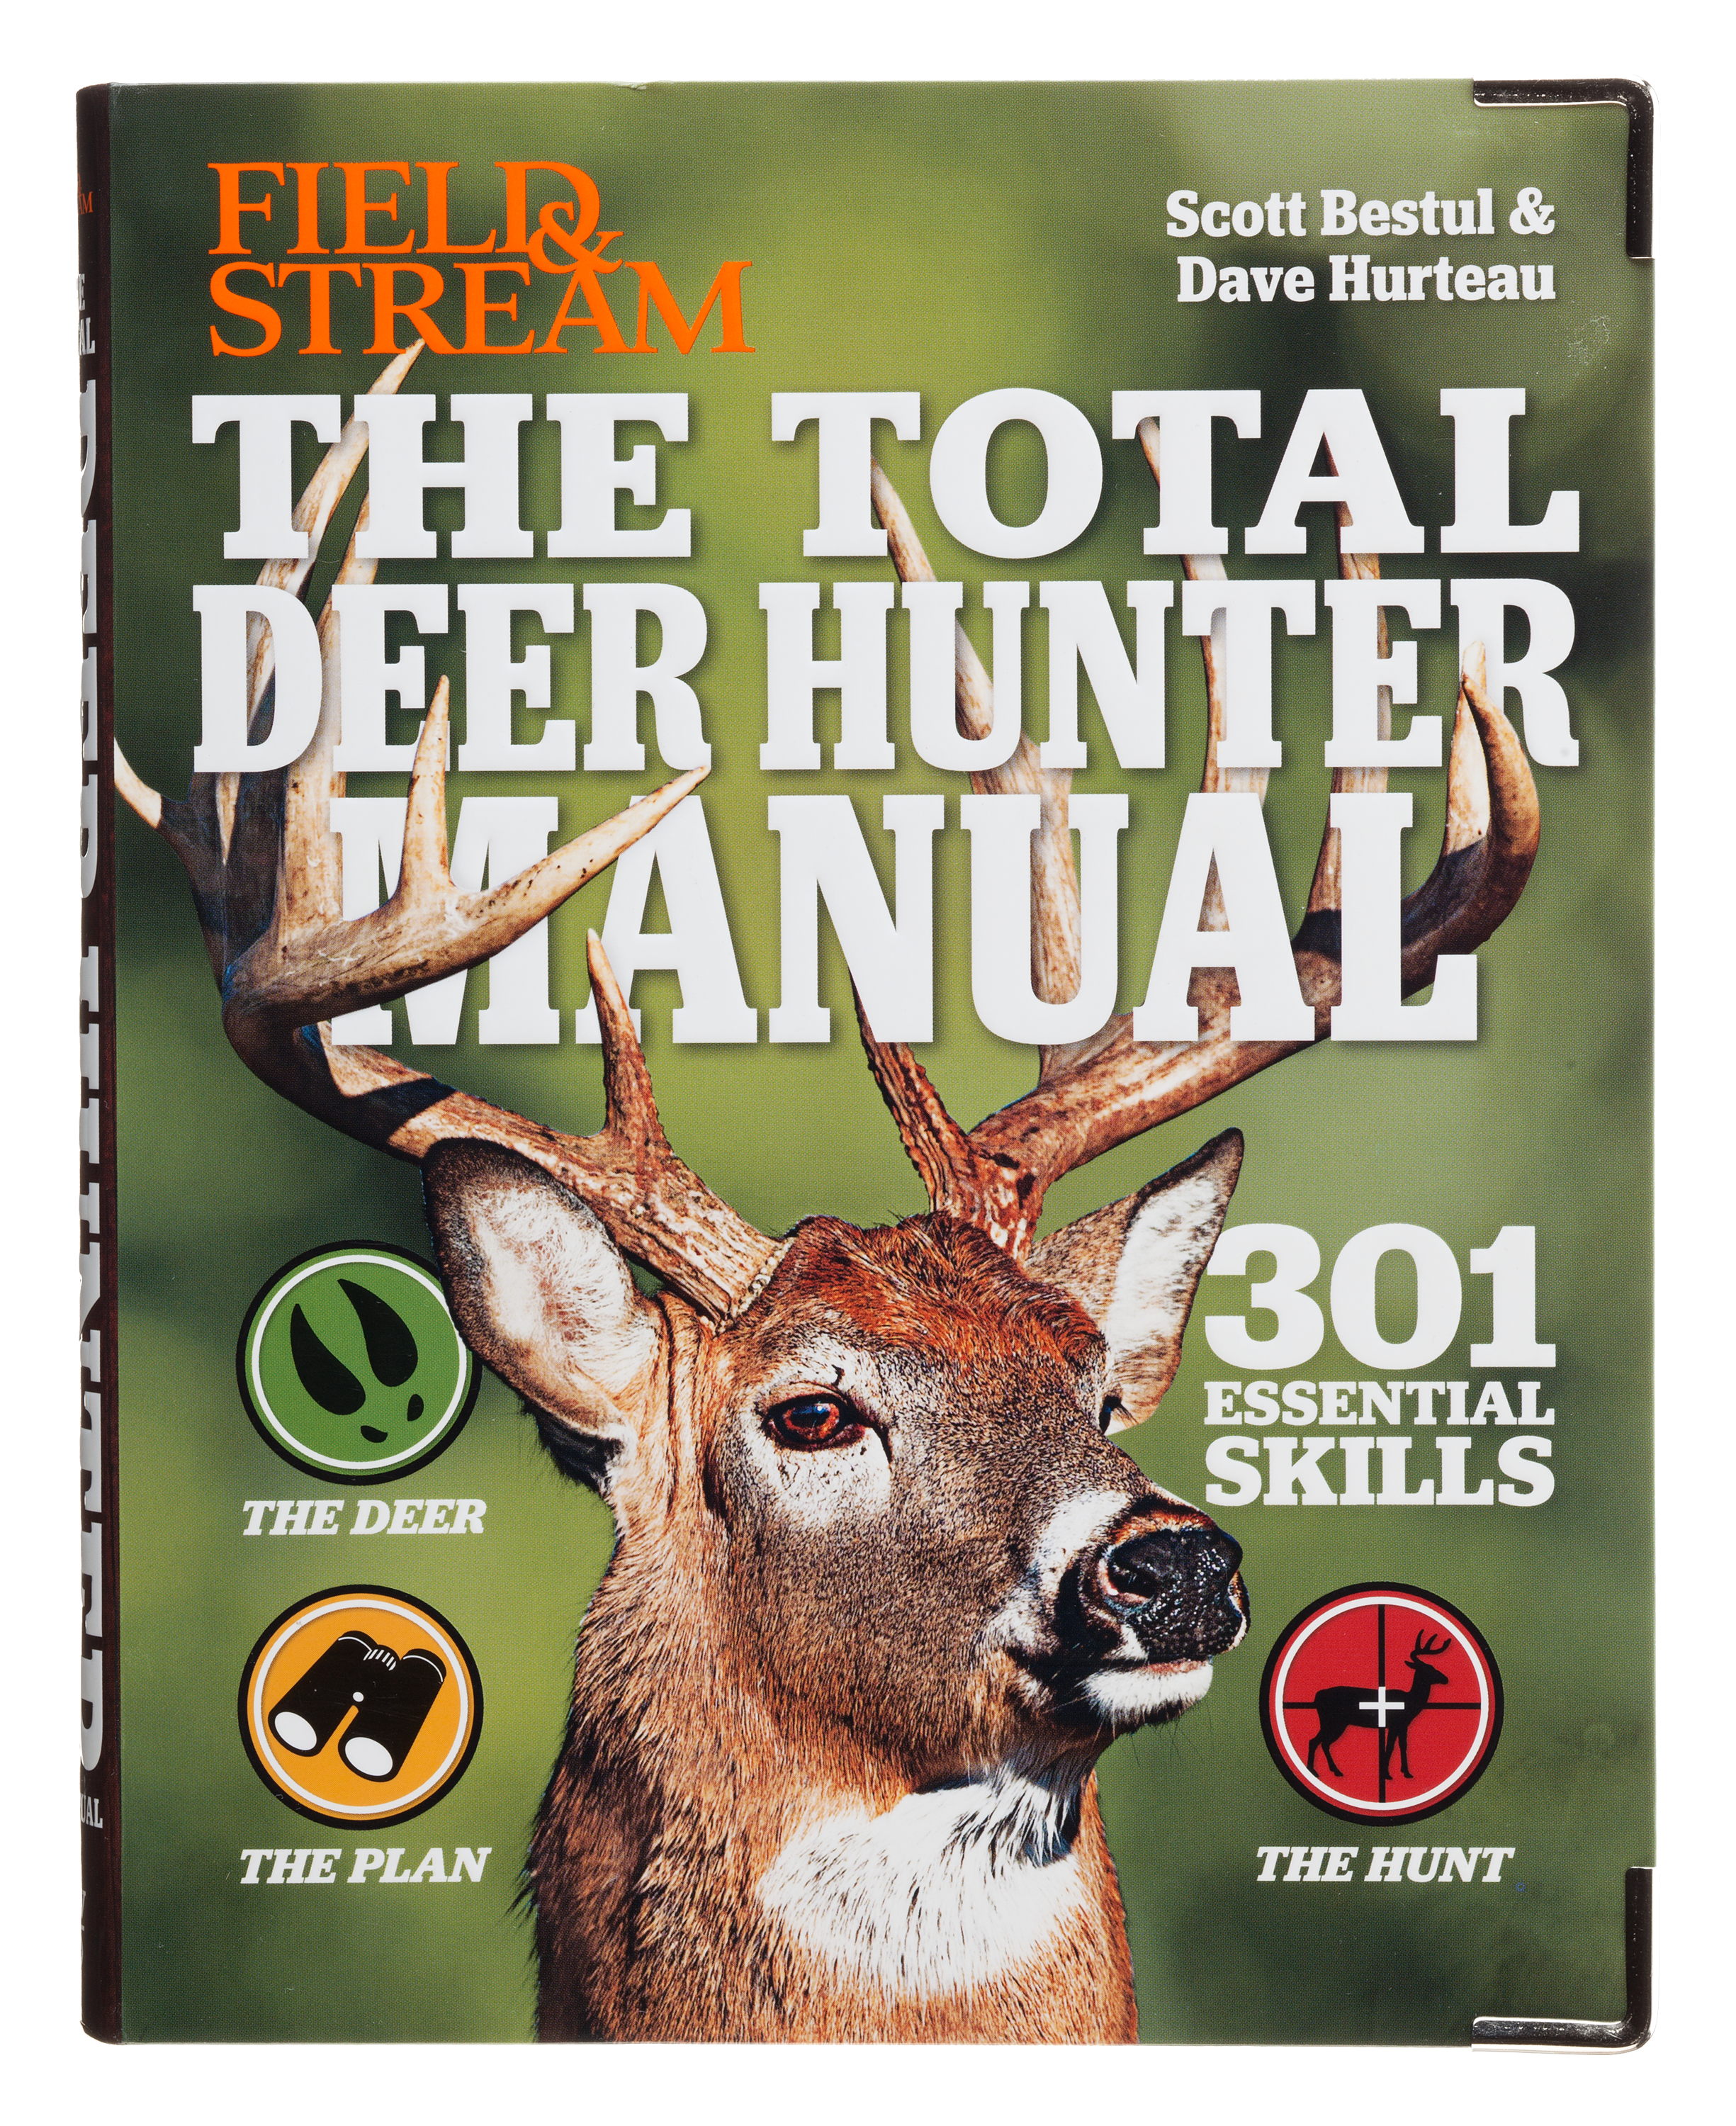 Field & Stream The Total Deer Hunter Manual by Scott Bestul and